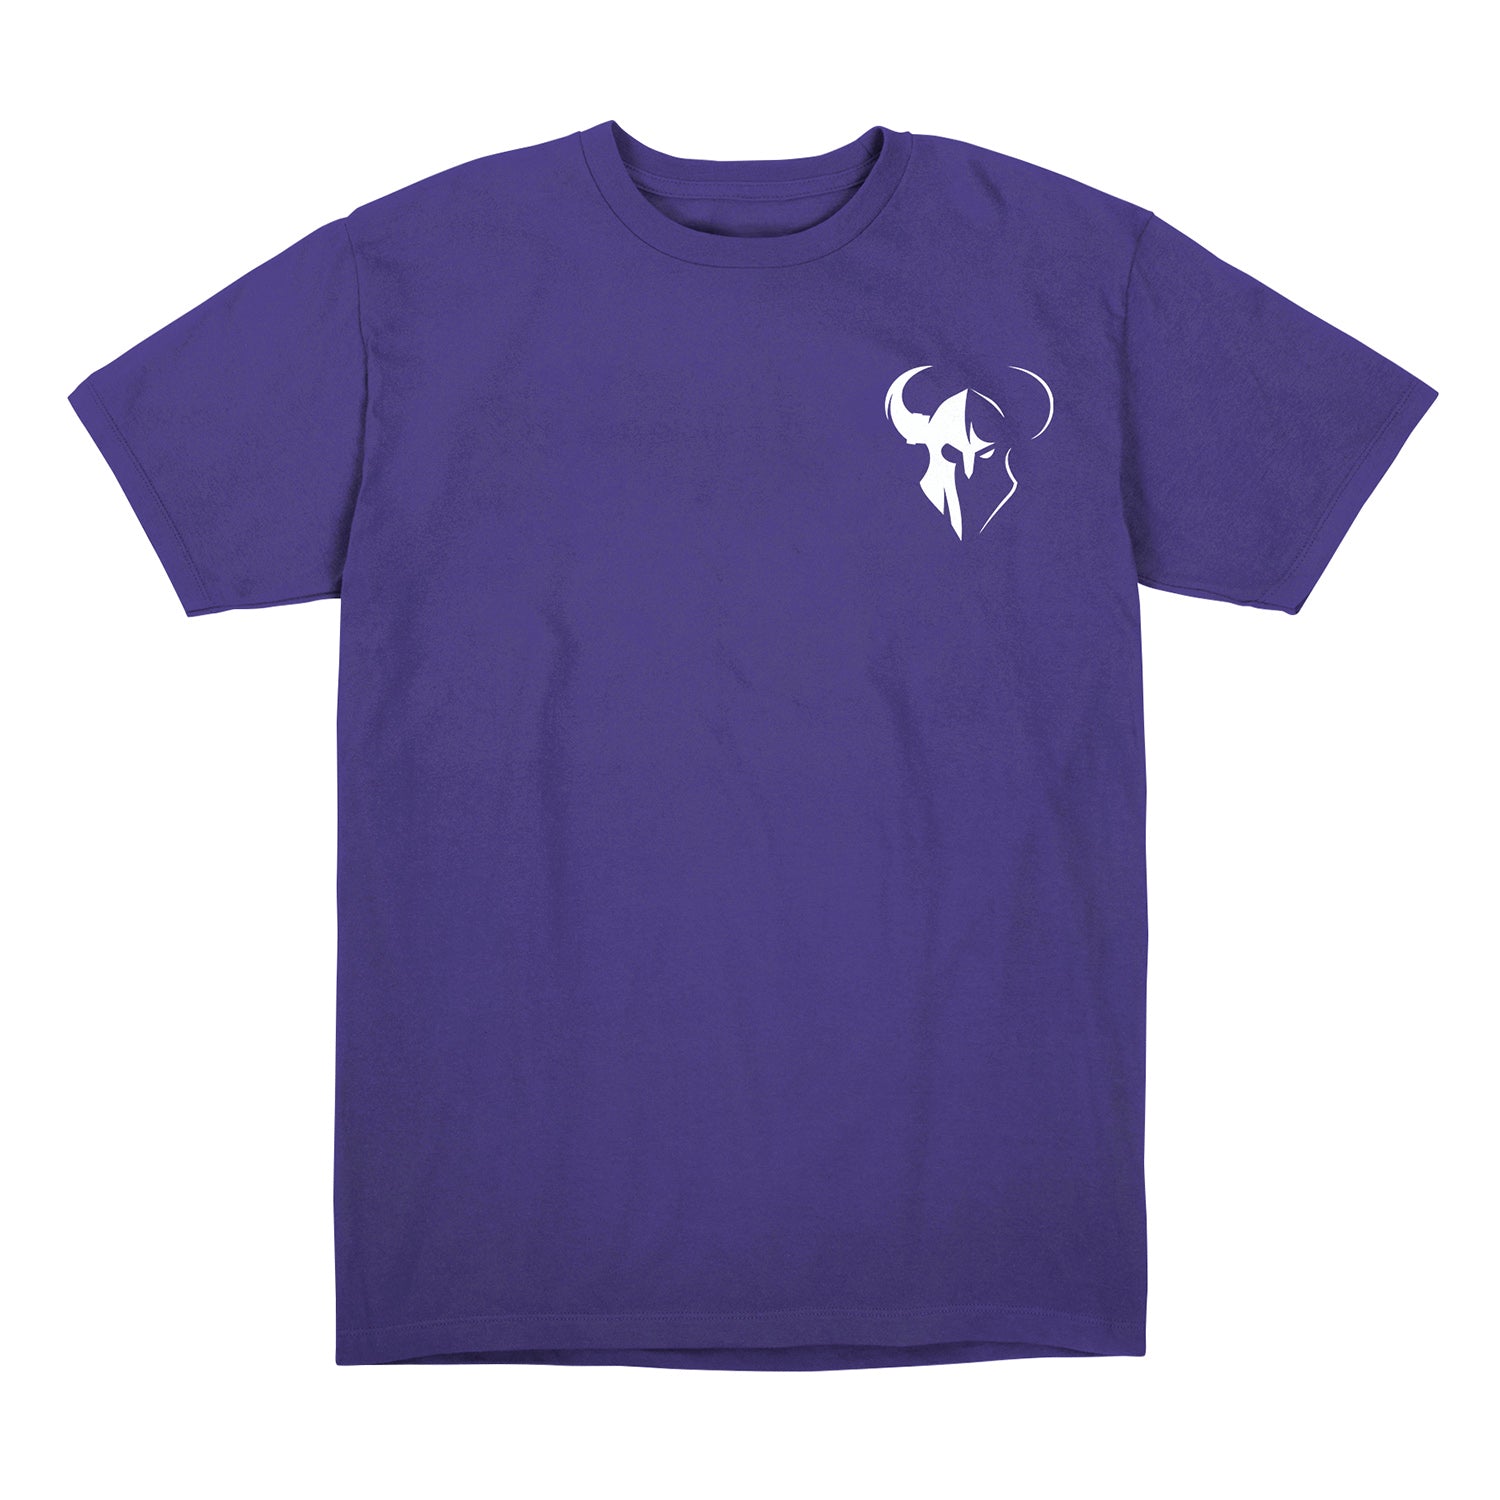 Minnesota Rokkr Purple Slogan T-Shirt - Front View